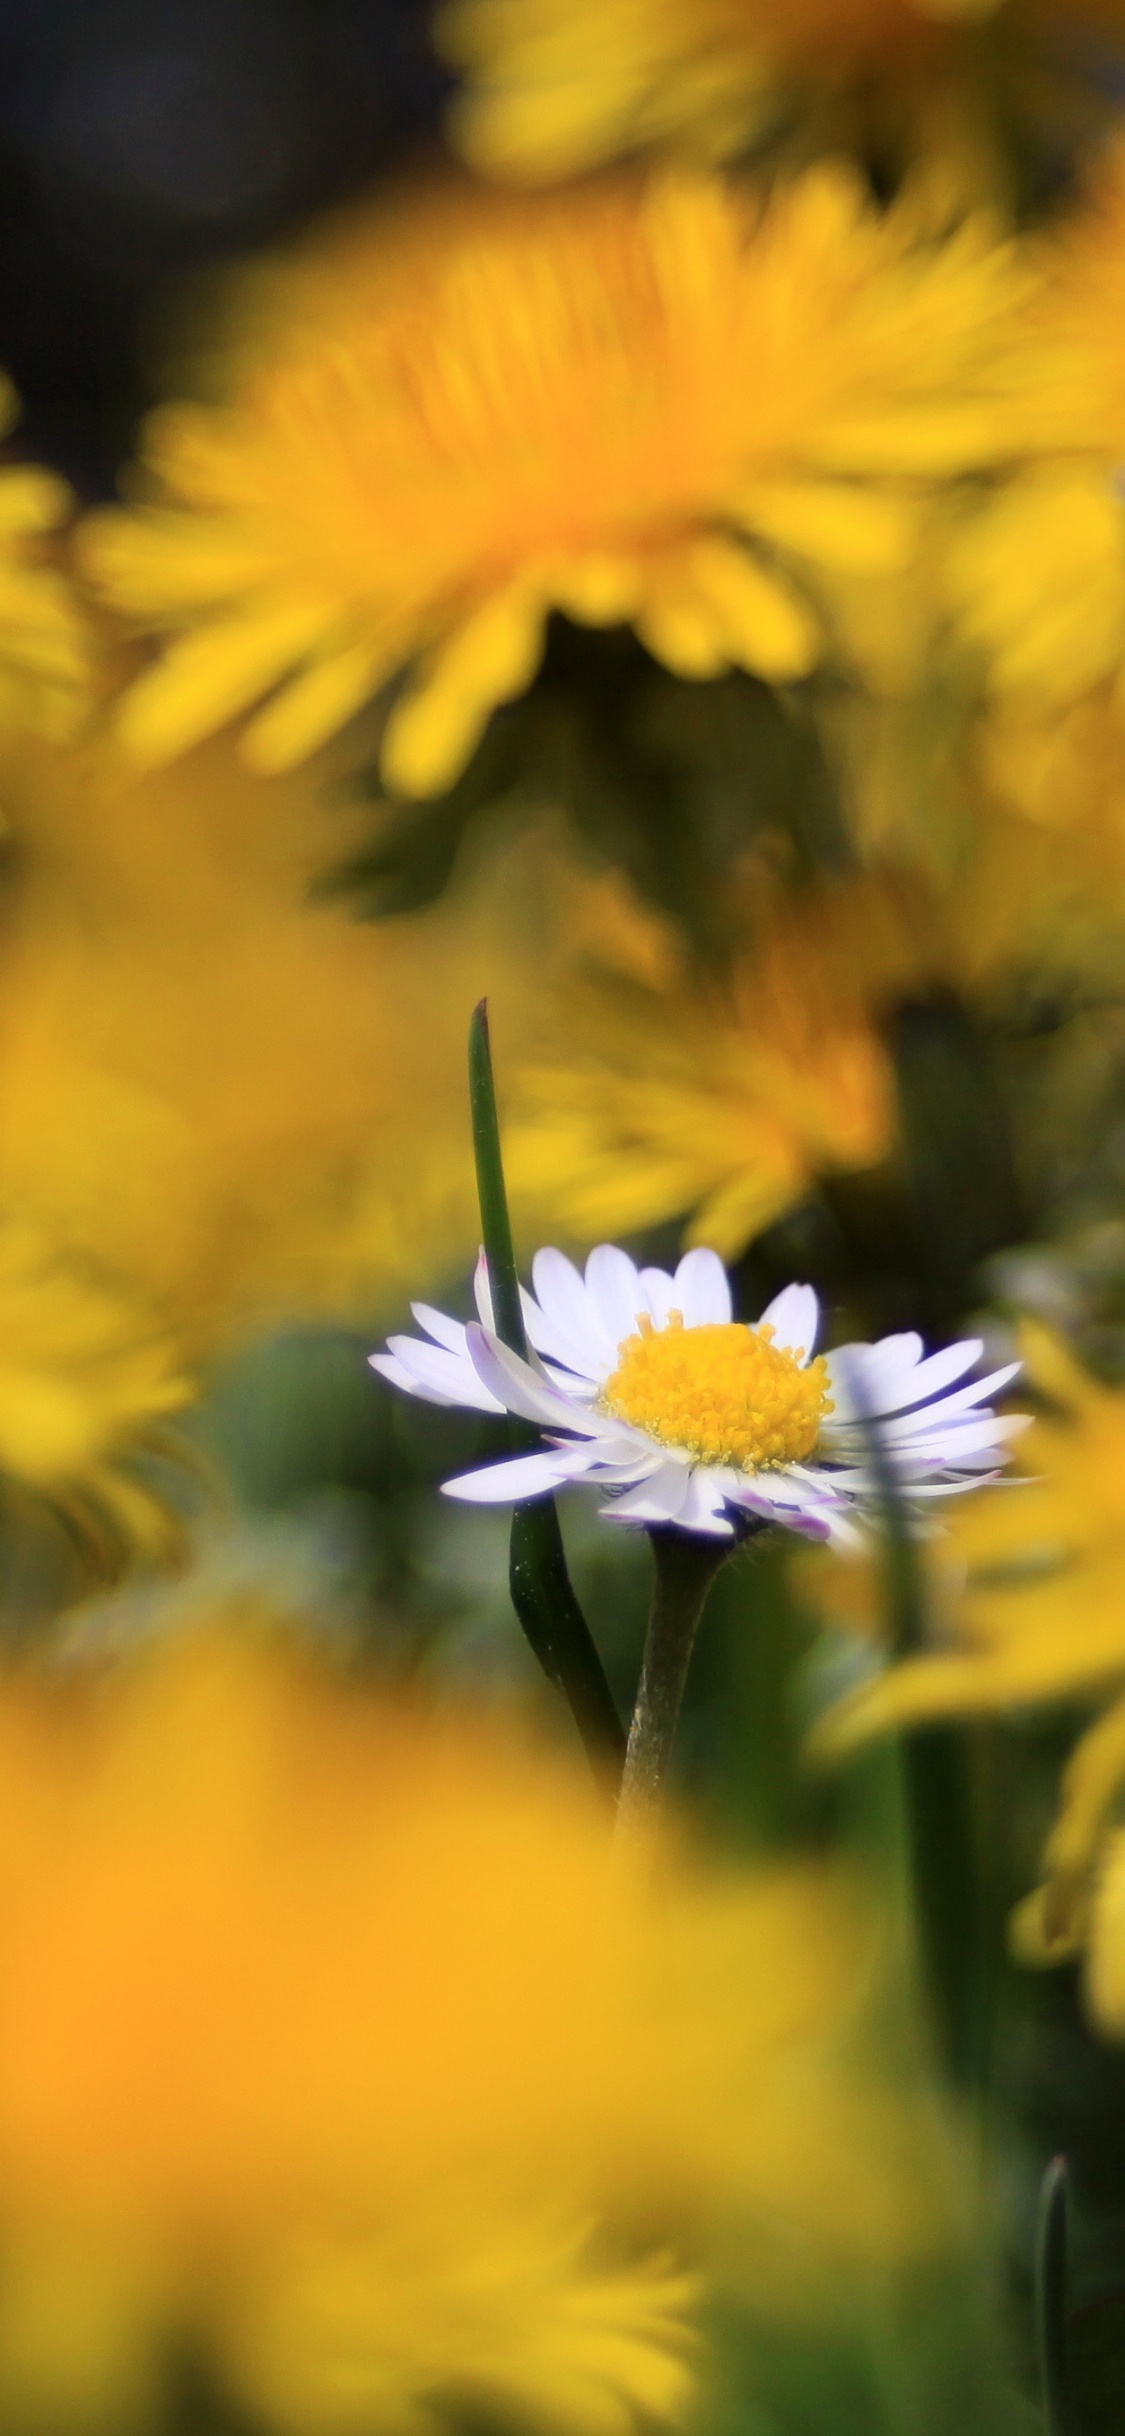 Yellow and White Flowers in Tilt Shift Lens. Wallpaper in 1125x2436 Resolution